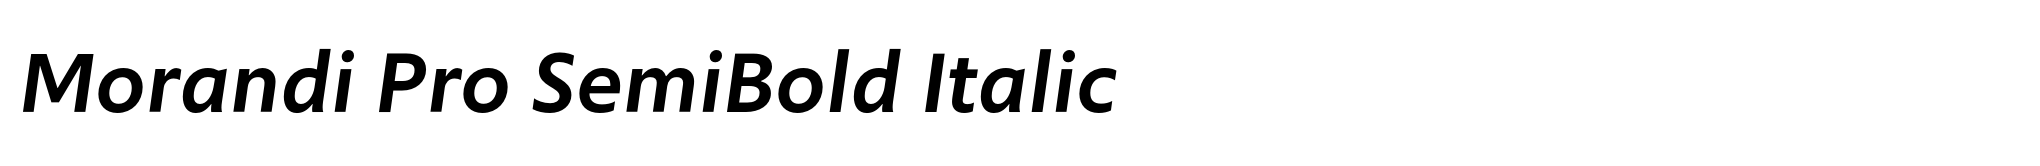 Morandi Pro SemiBold Italic image